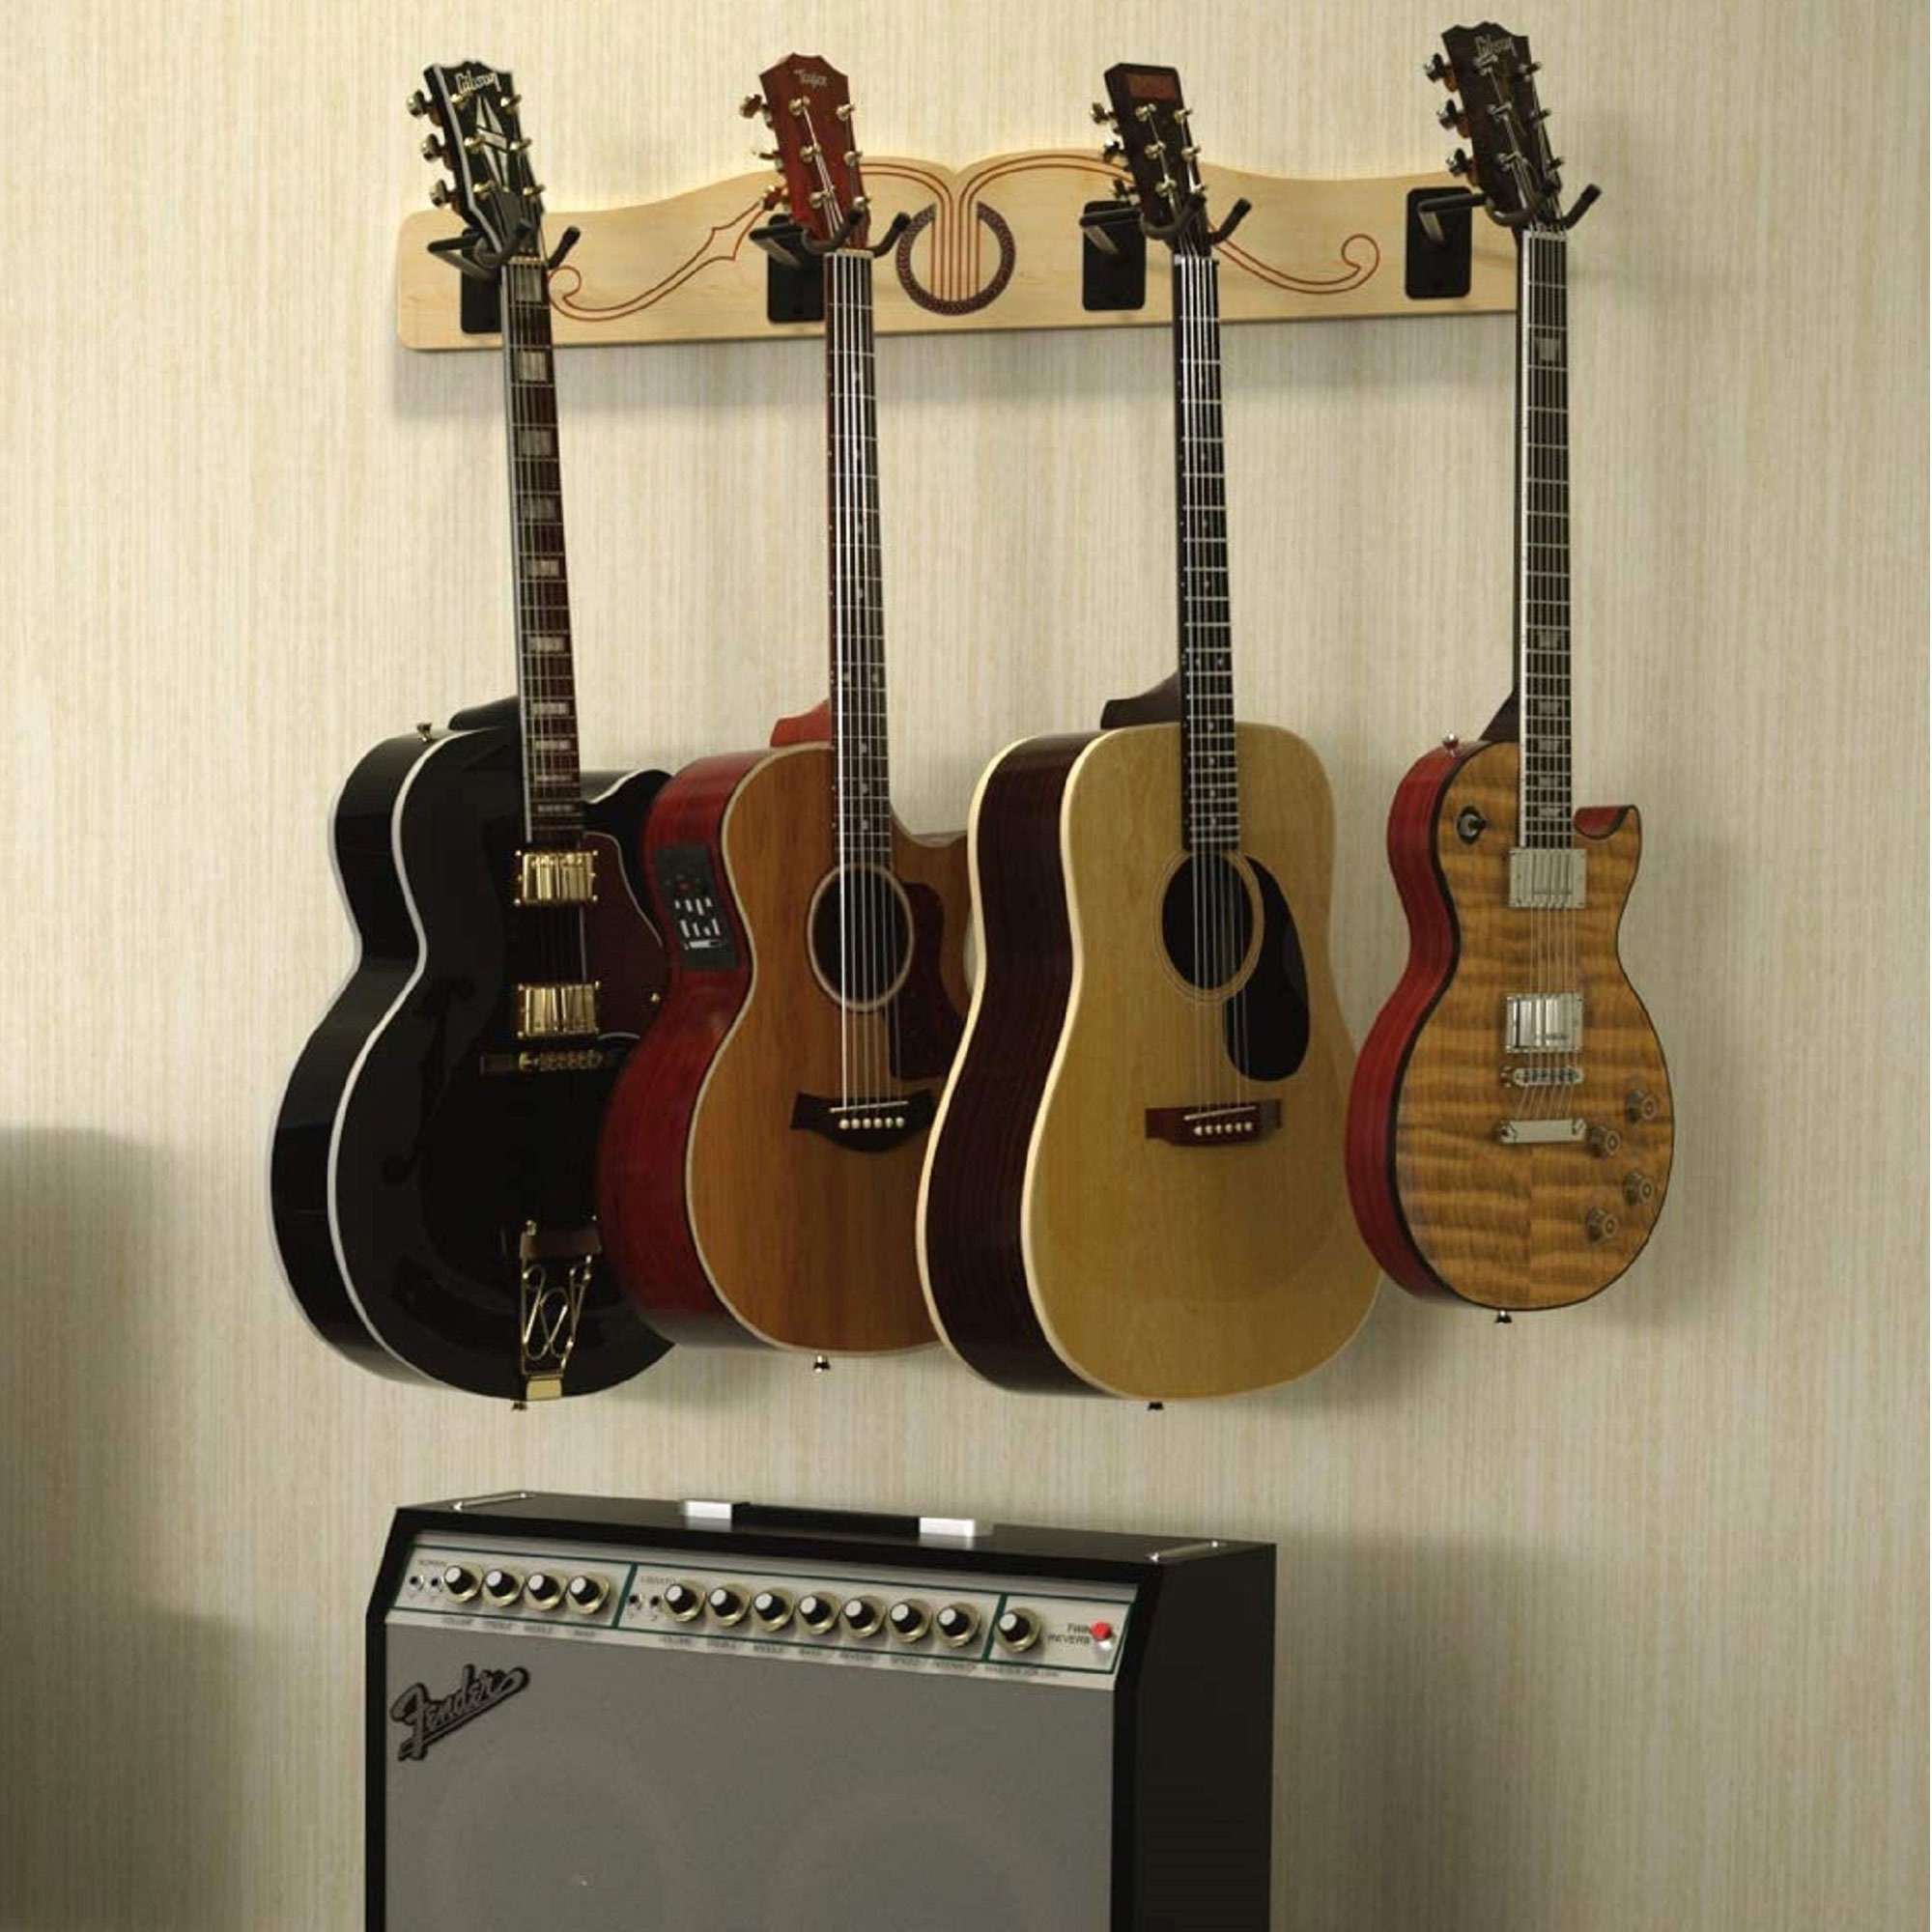 El colgador para múltiples guitarras montado en pared - Etsy México